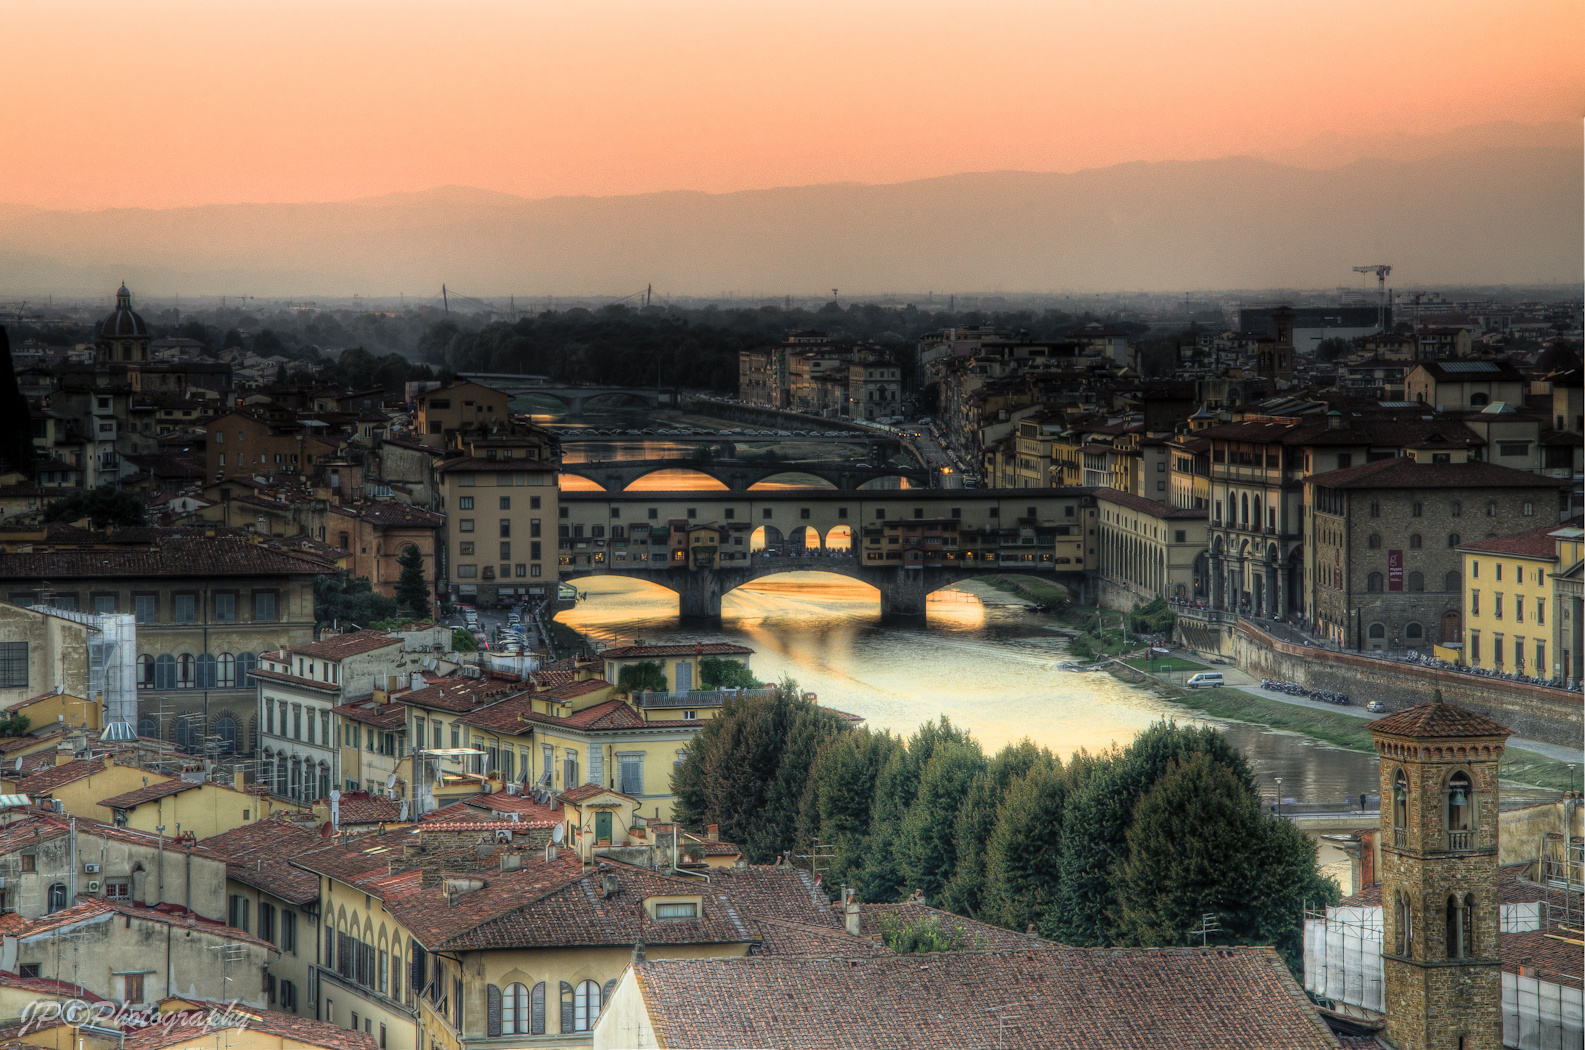 Sonnenuntergang in Italien. Florenz - Ponte Vecchio